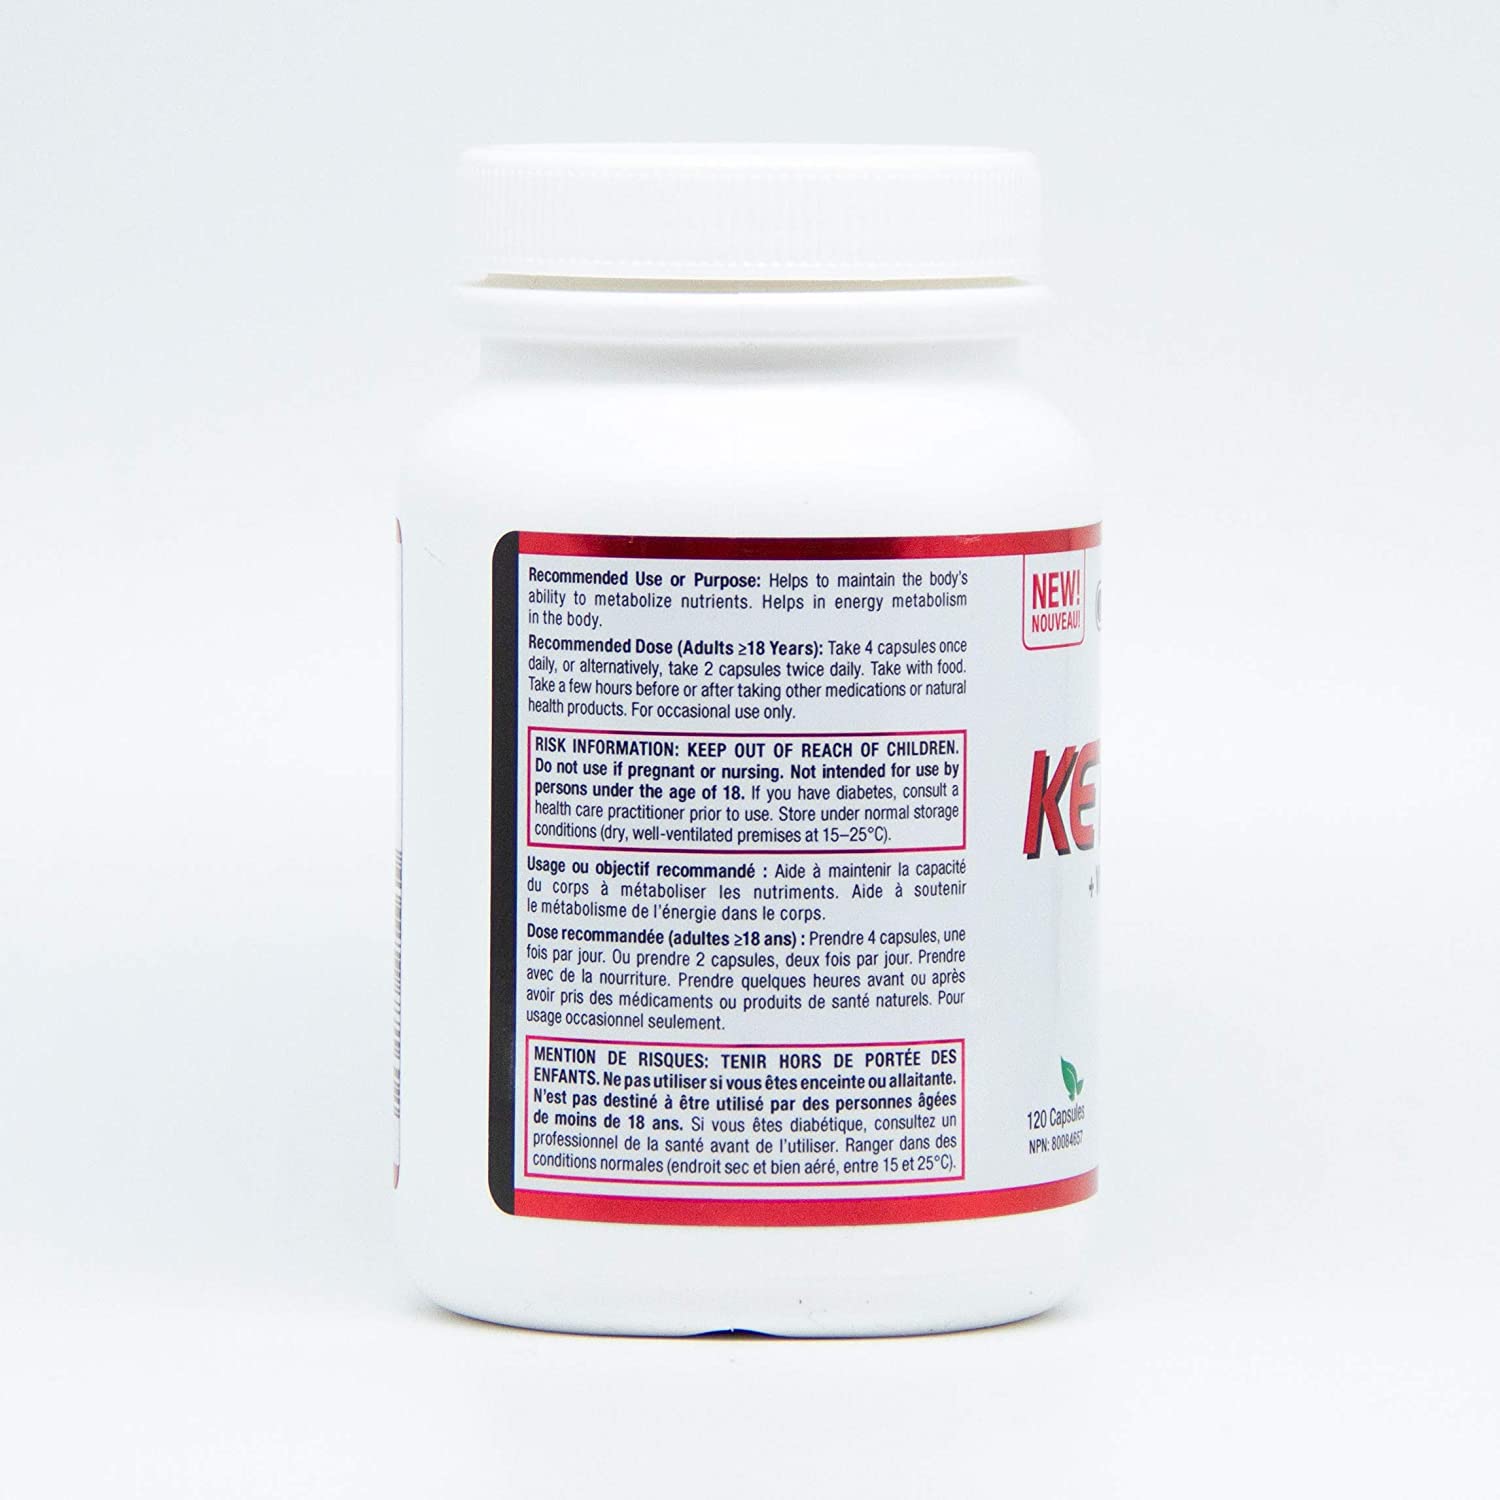 SD Pharmaceuticals+Vitamins B6&amp;B12-30Serv.-120Caps.